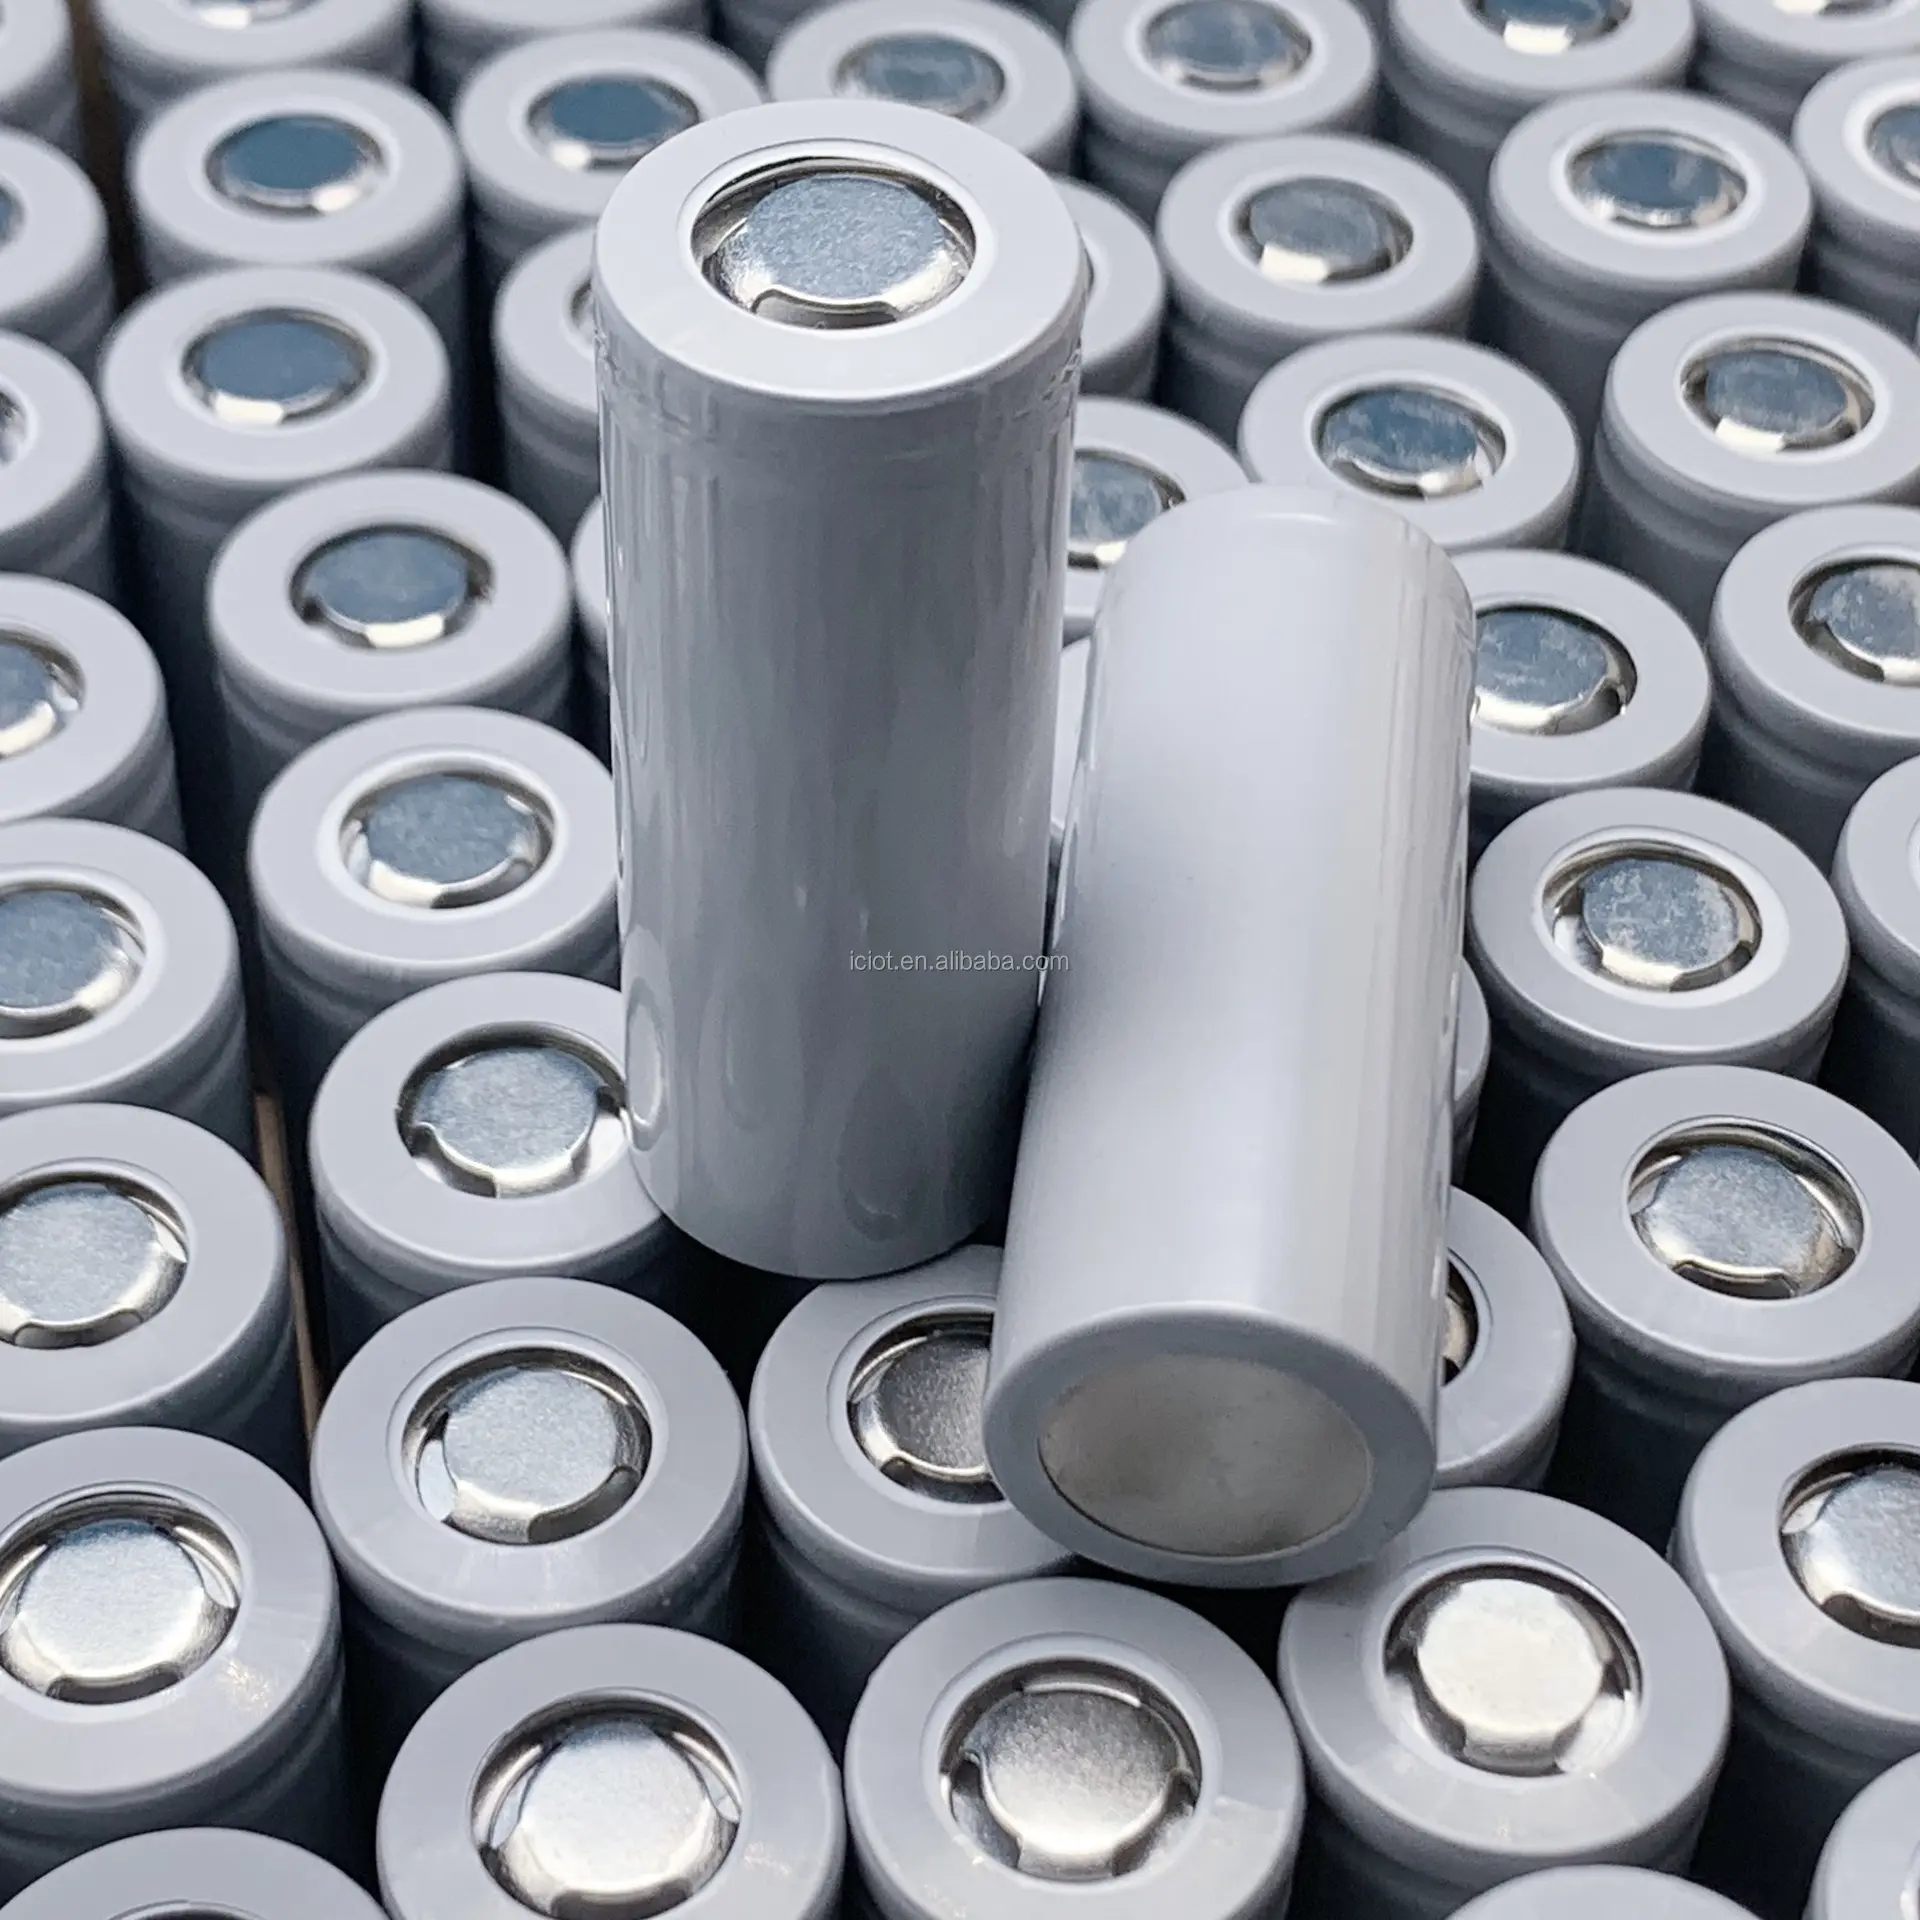 Célula de batería de litio recargable, pila de ion de litio de alta capacidad, 21700 mah, 4500 v, 3,7 mah